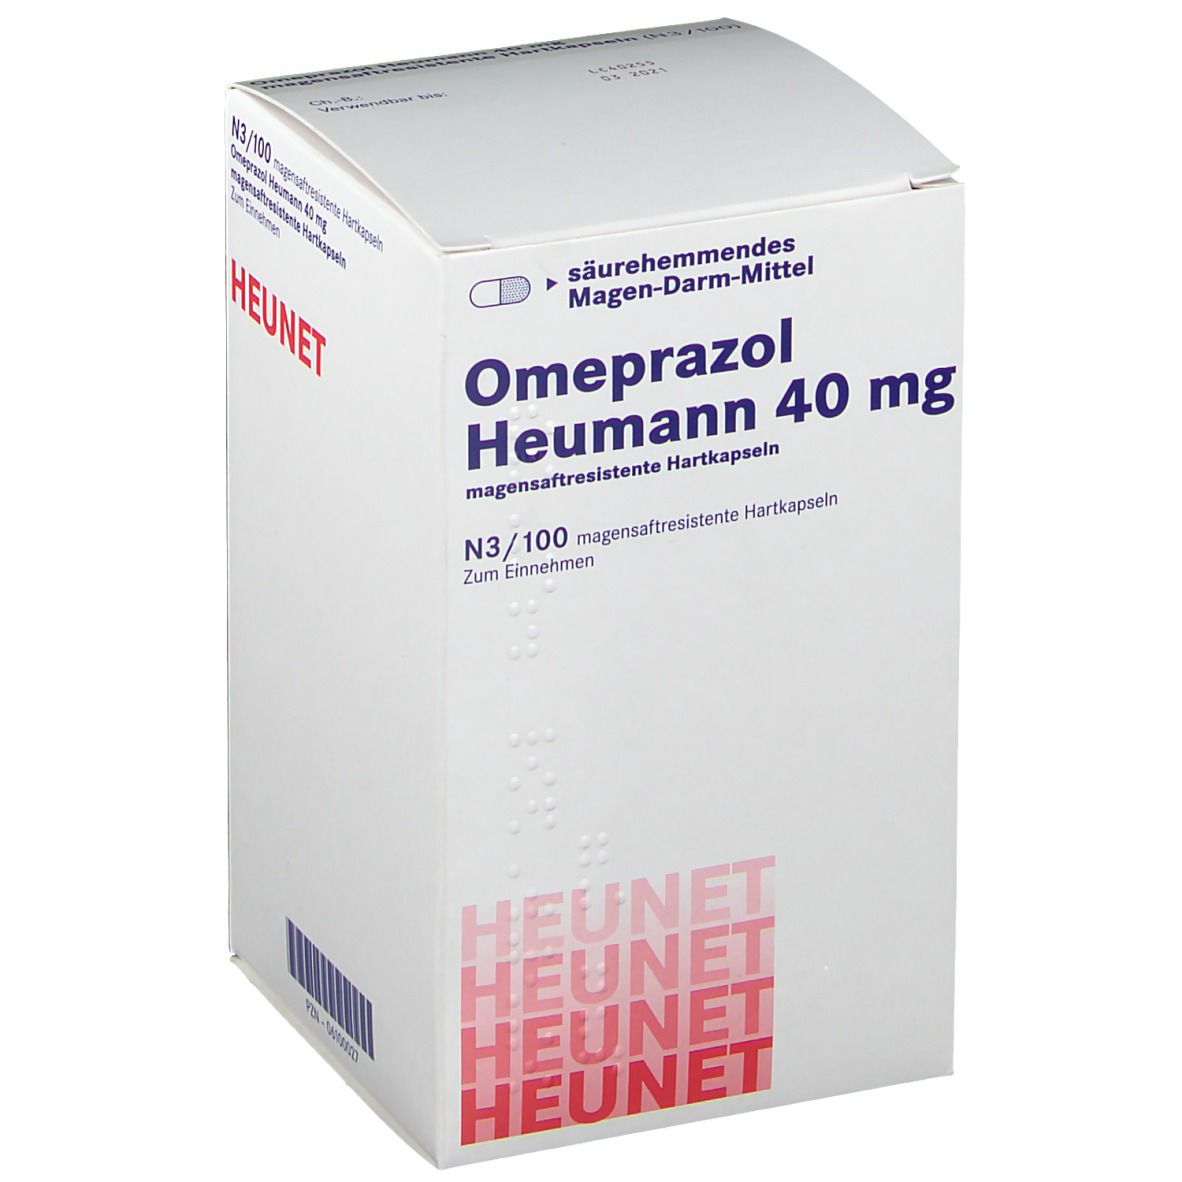 Omeprazol Heumann 40 mg